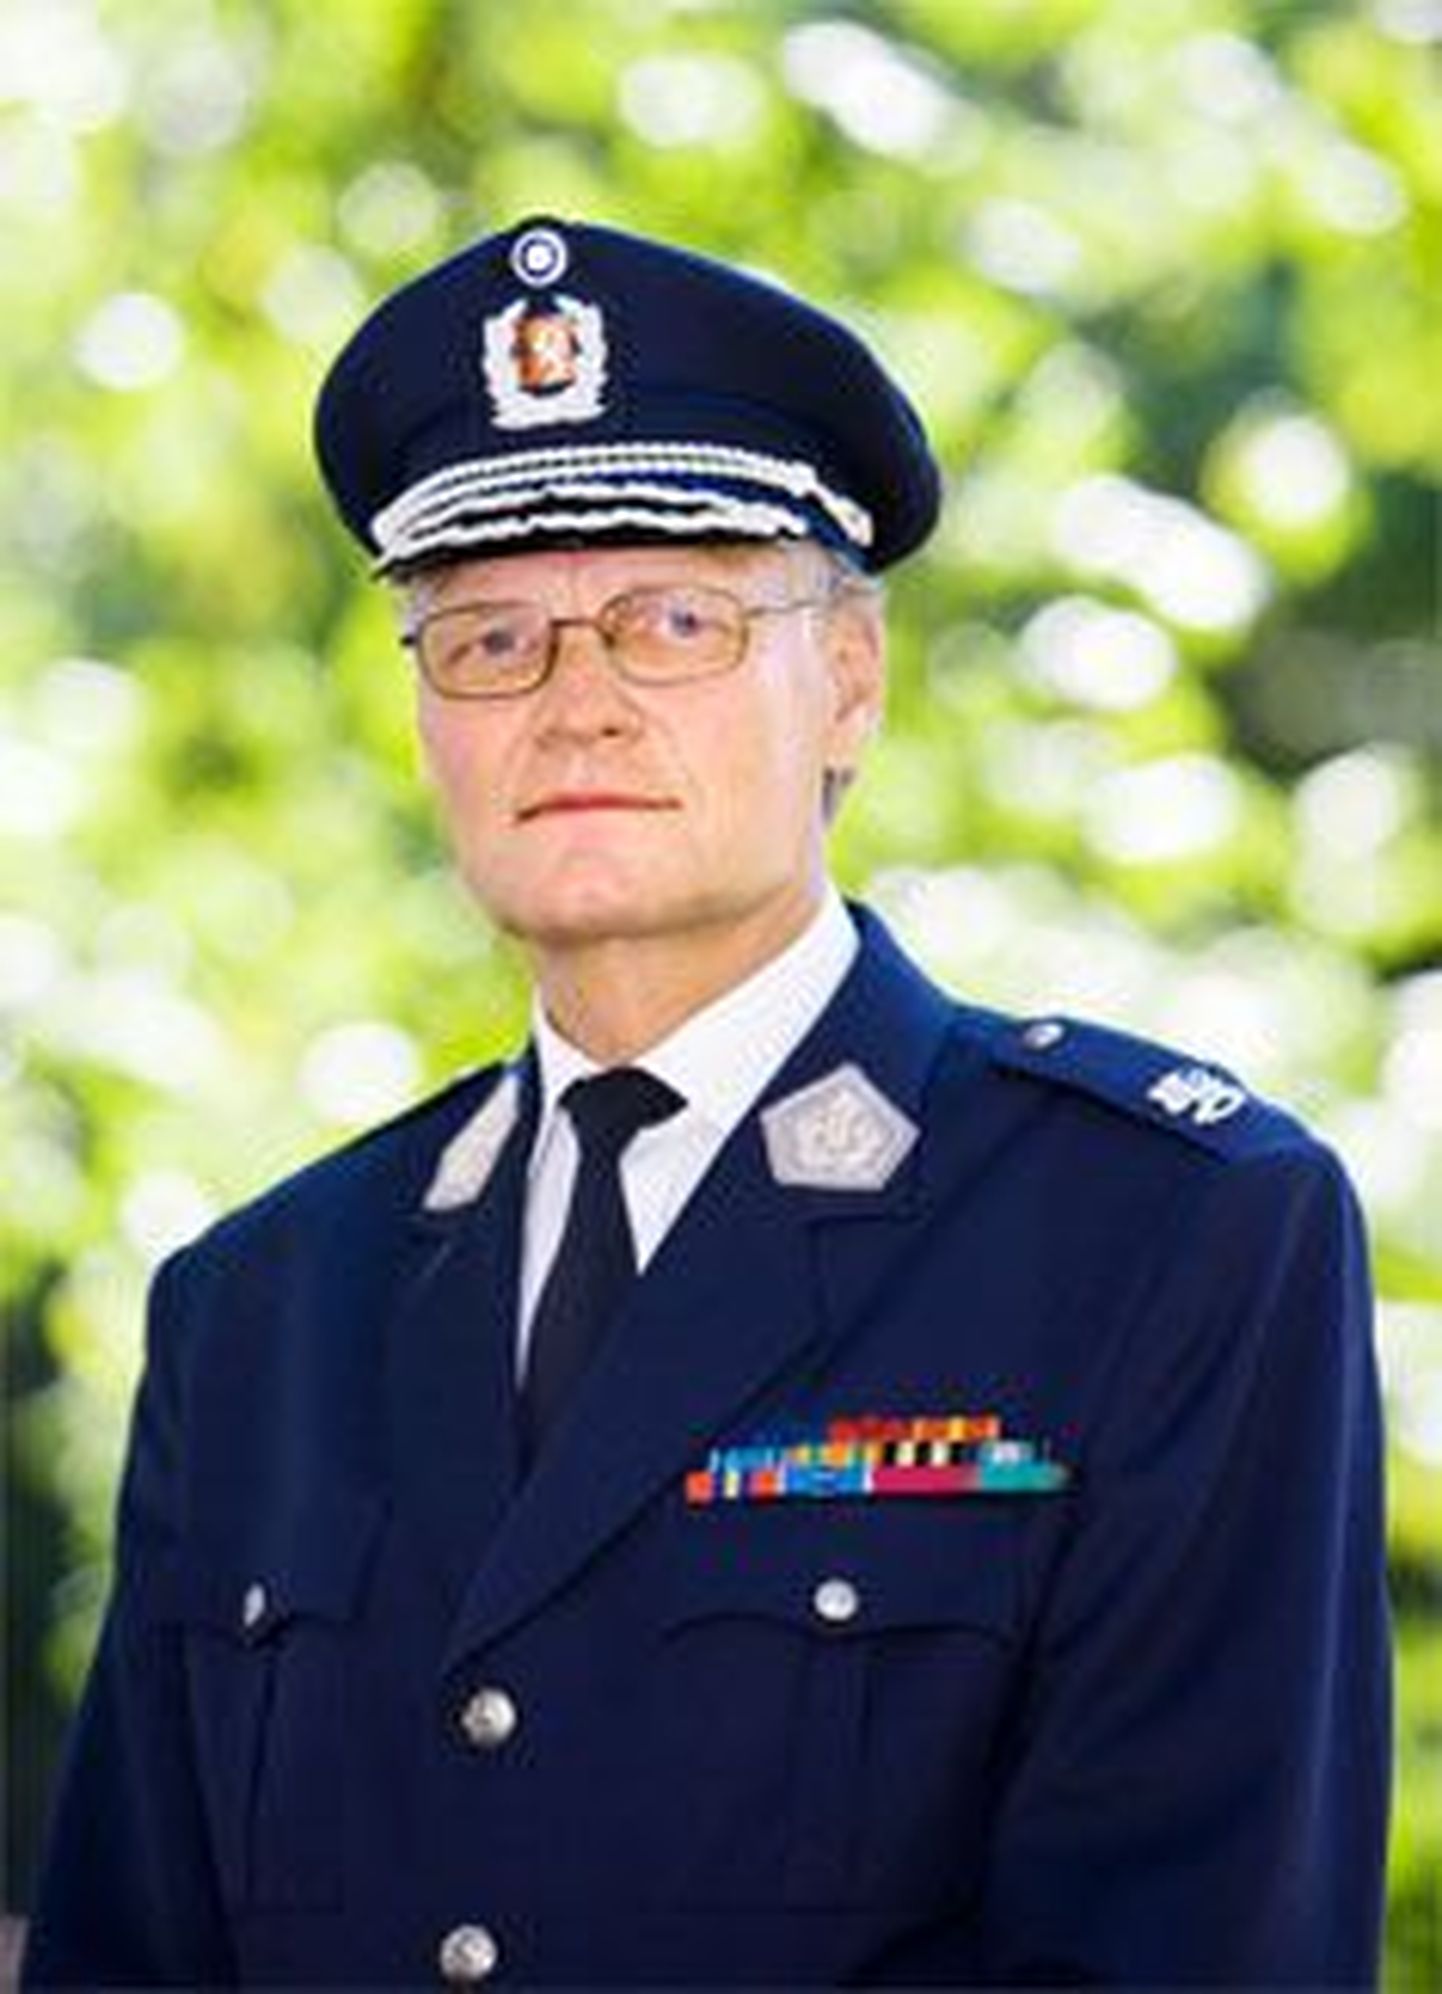 Soome politsei peadirektor Mikko Paatero